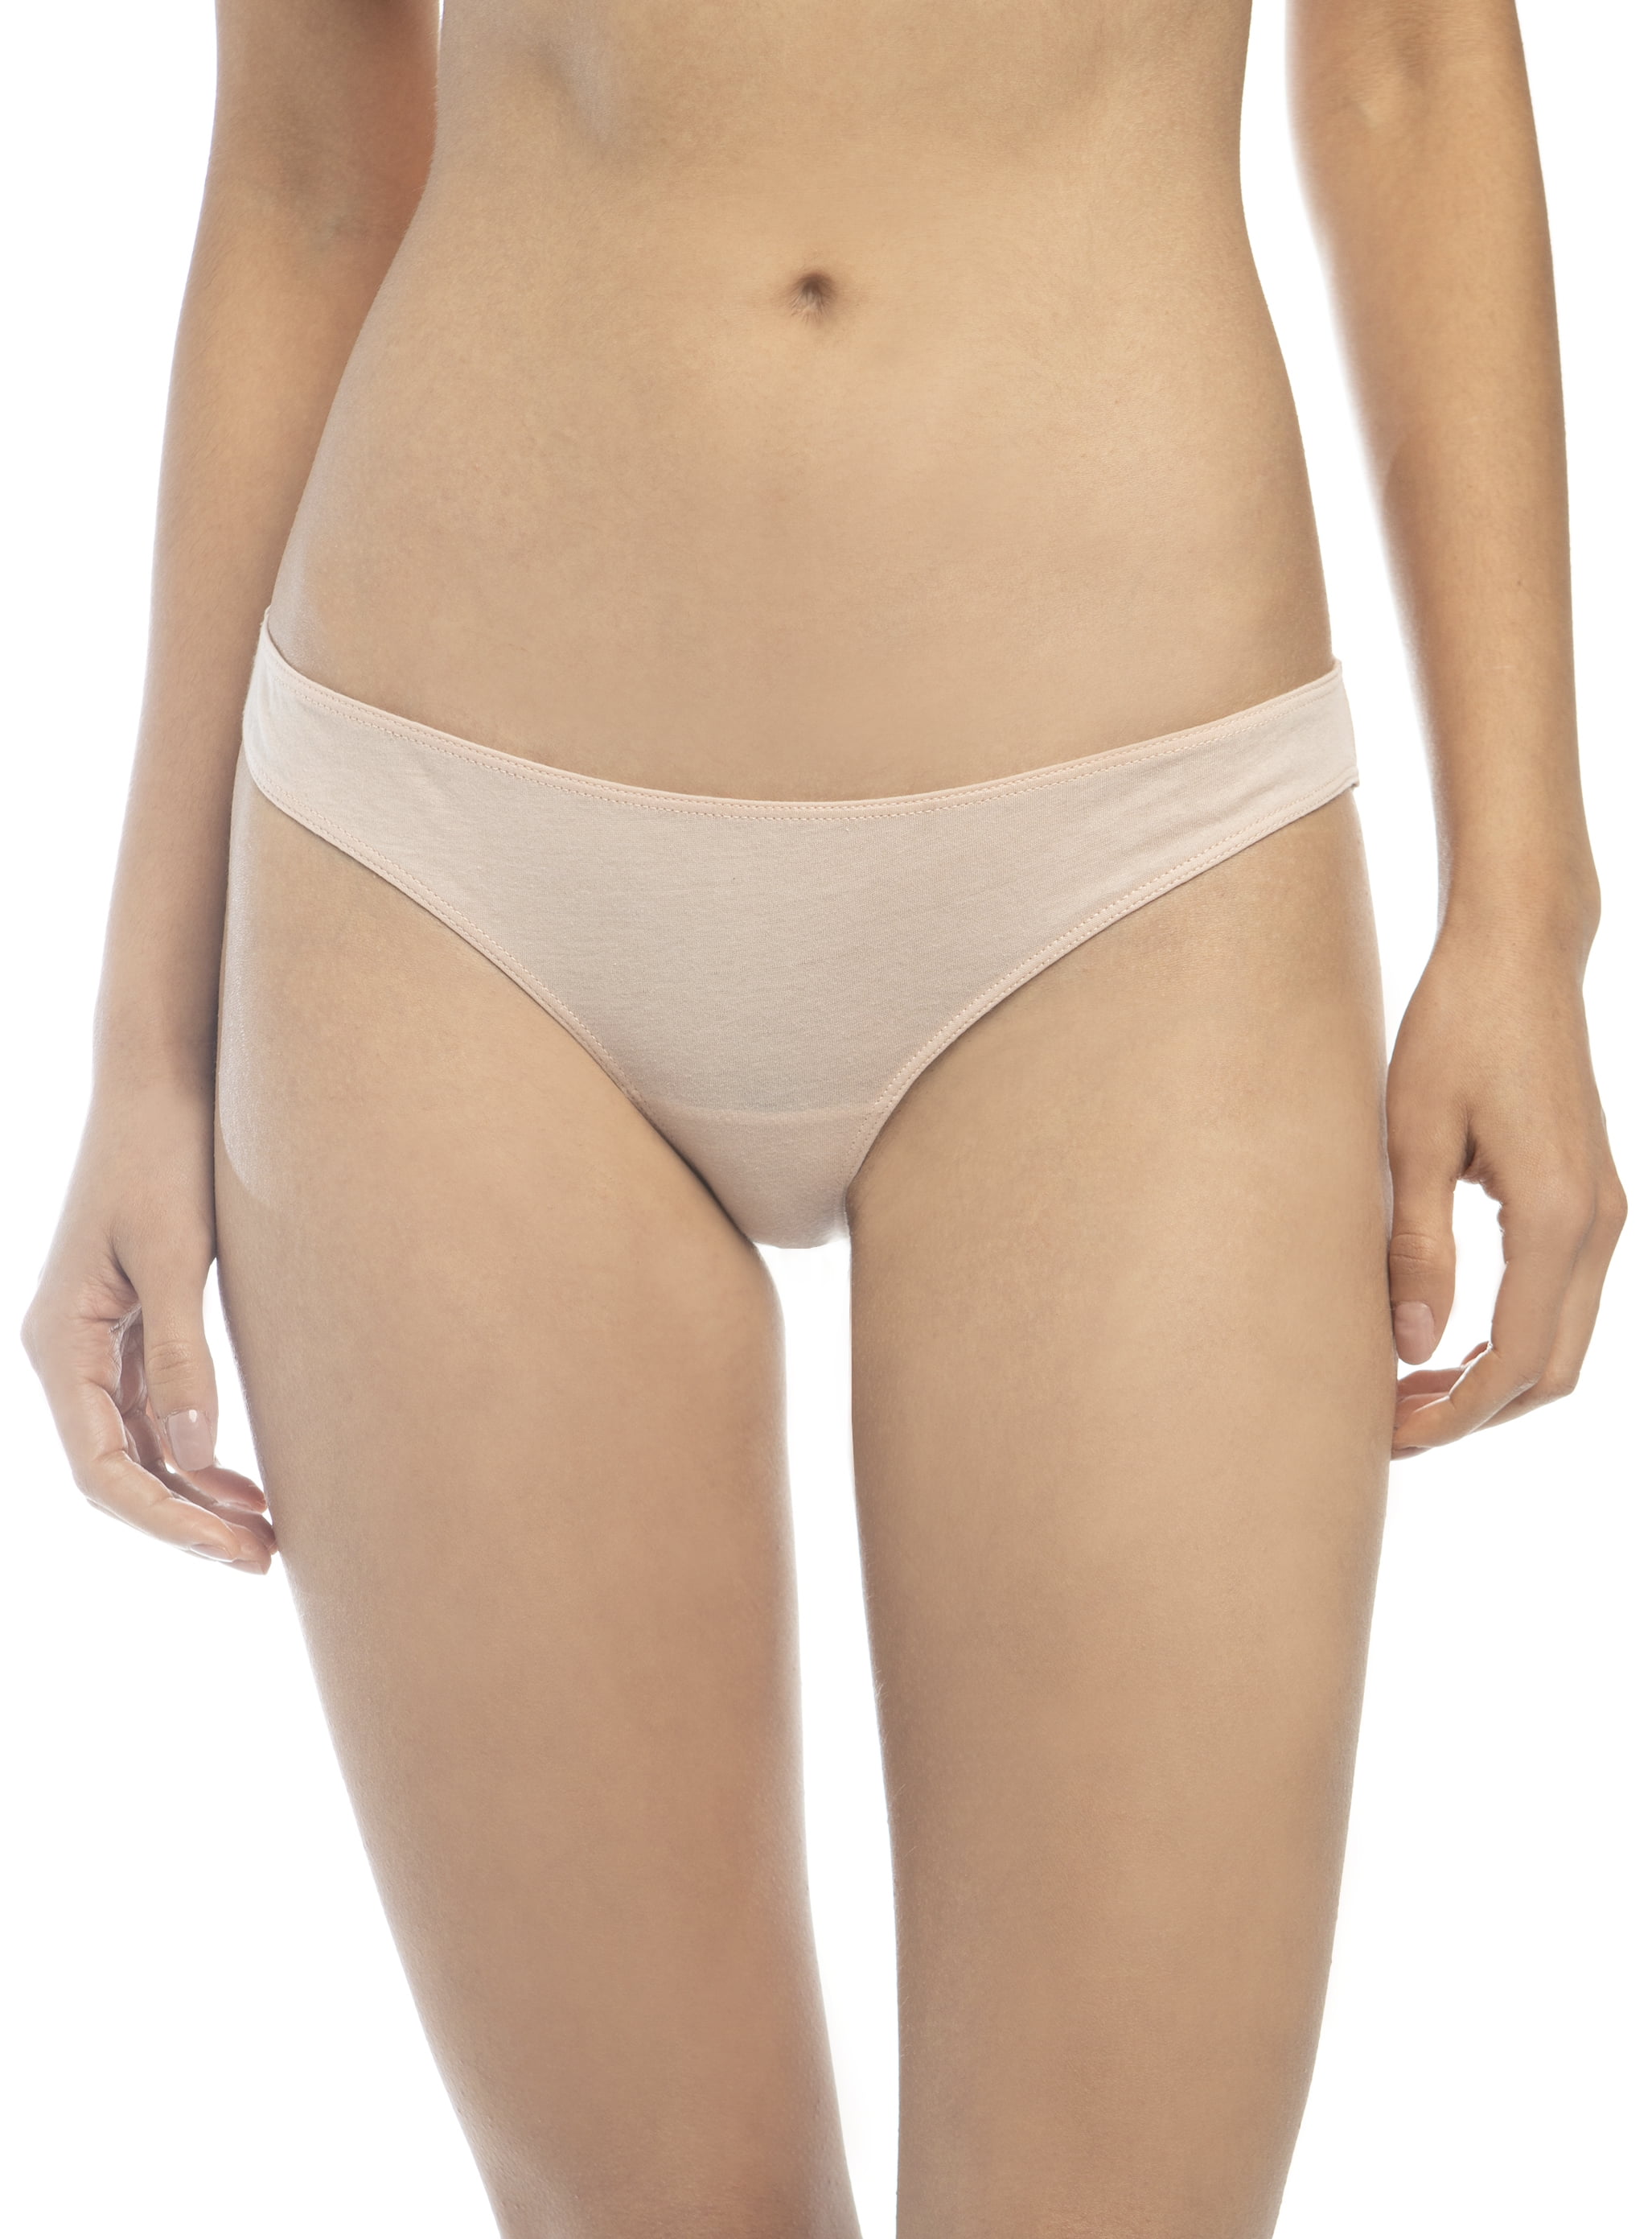 Womens 100% Silk Panties Low-rise Bikini Gifts Underwear Nudies Knickers White 